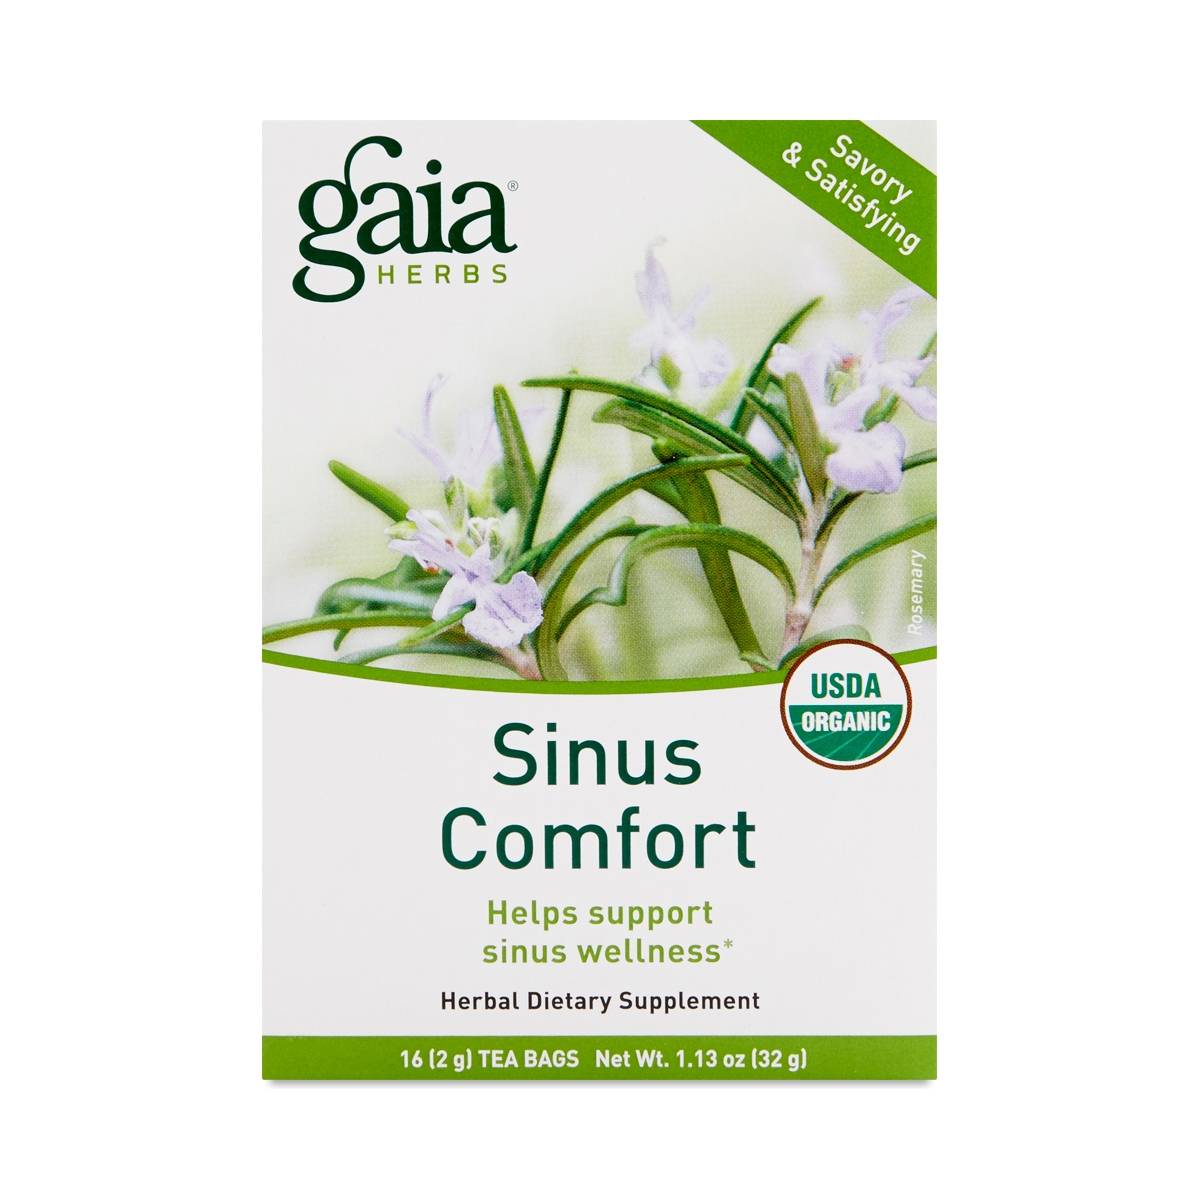 Gaia Herbs Sinus Comfort Tea